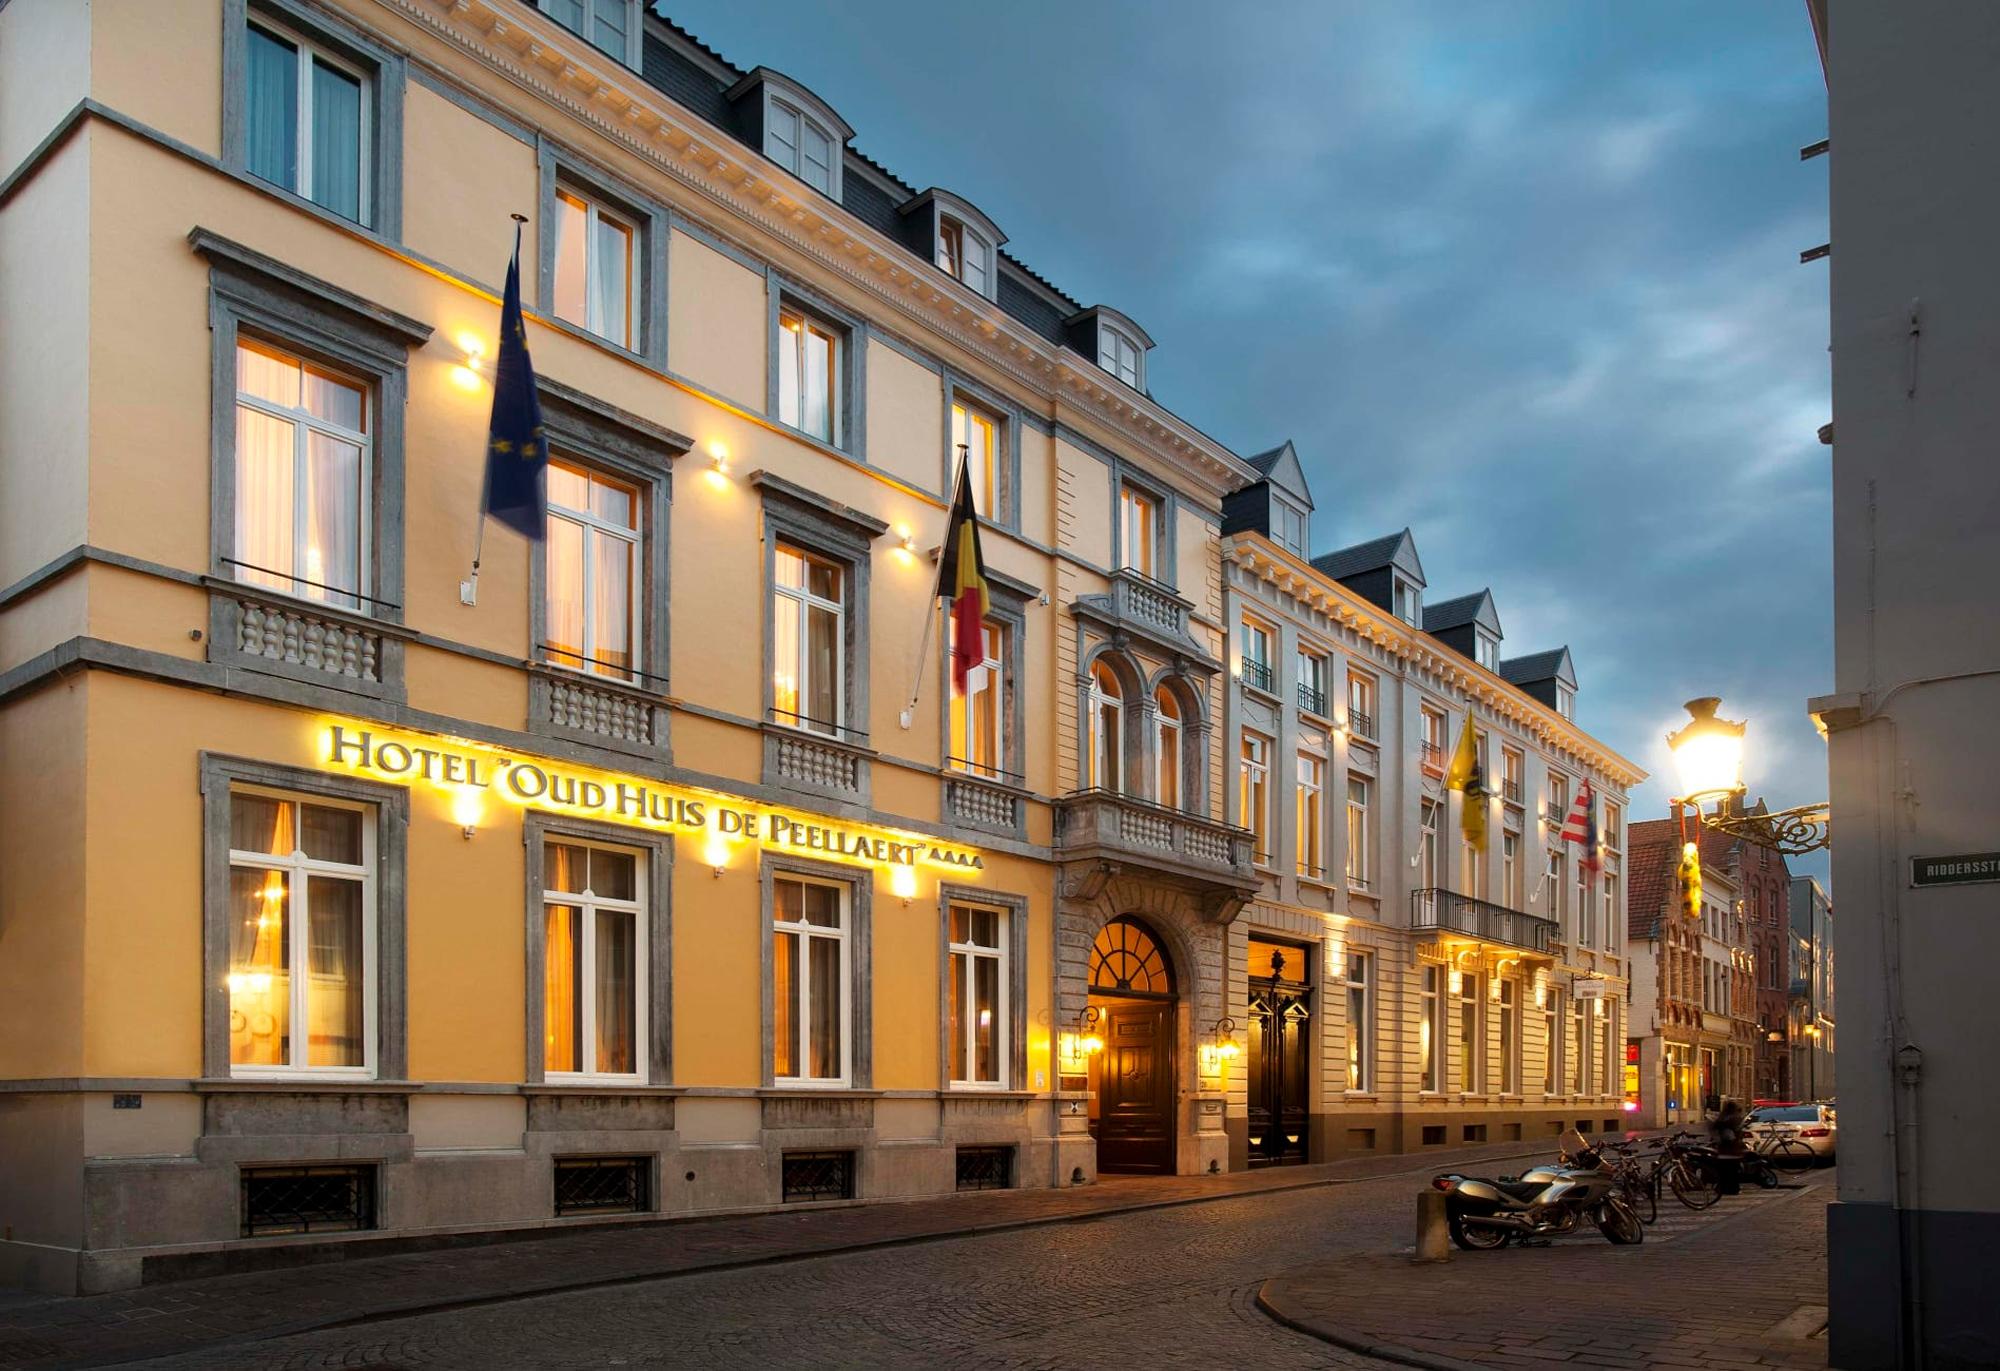 The Hotel Oud Huis de Peellaert's picturesque hotel in incredible Bruges  Ypres.